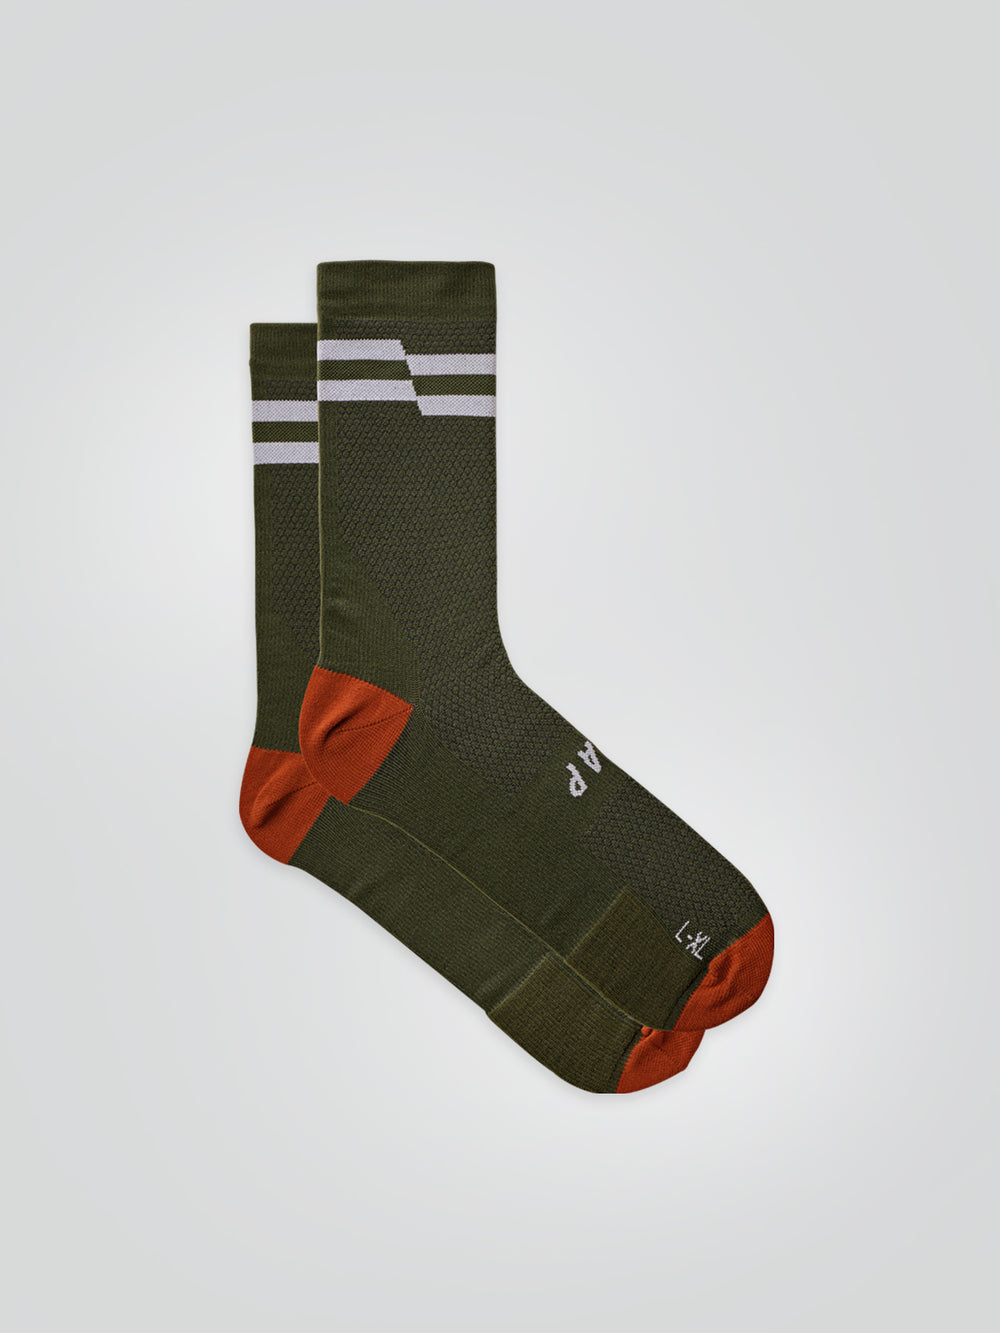 Product Image for Emblem Sock